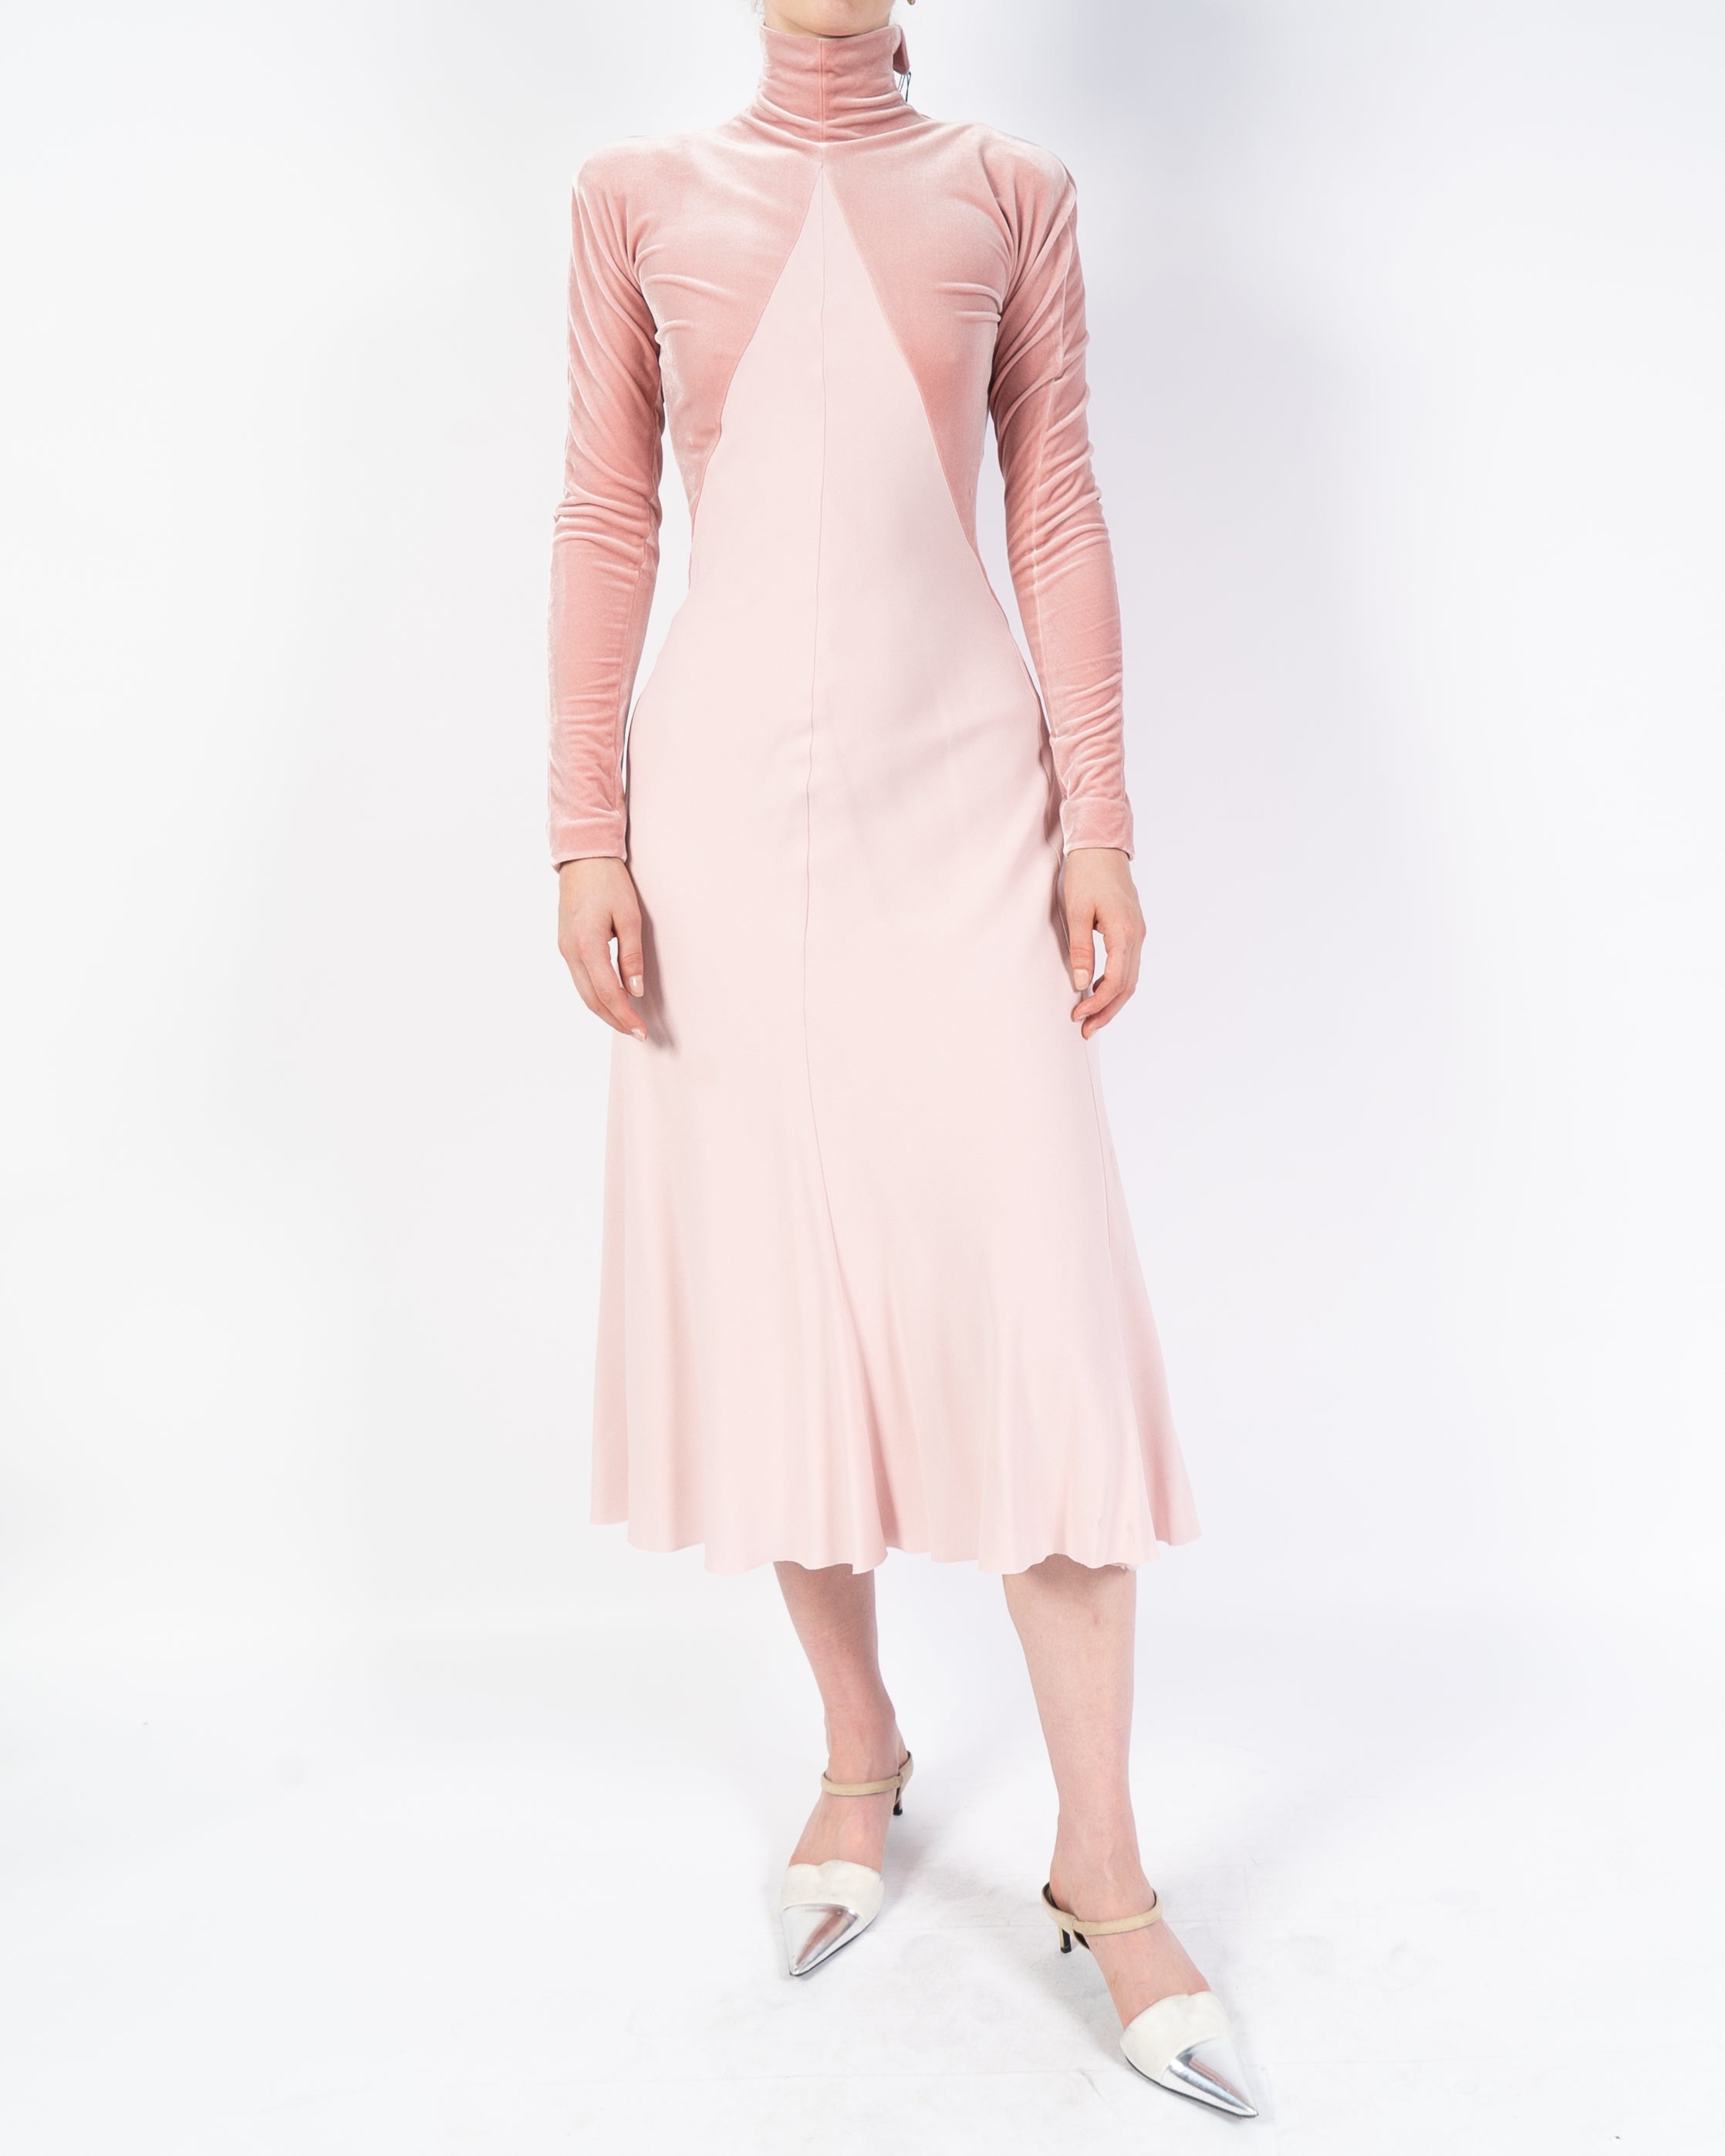 FW18 Turtleneck Rose Dress